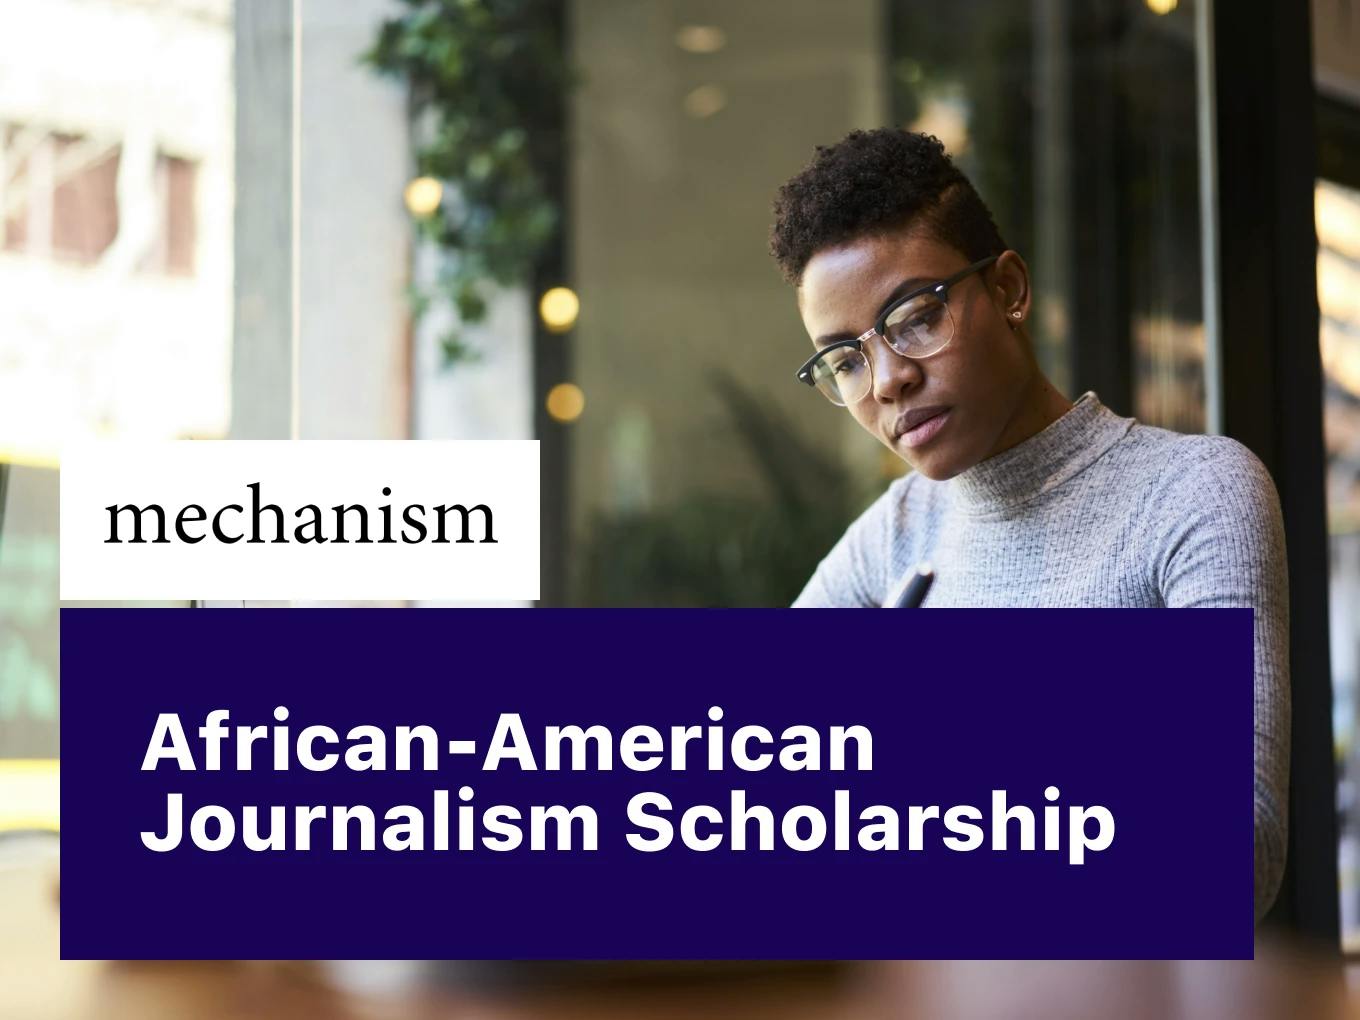 African-American Journalism Scholarship